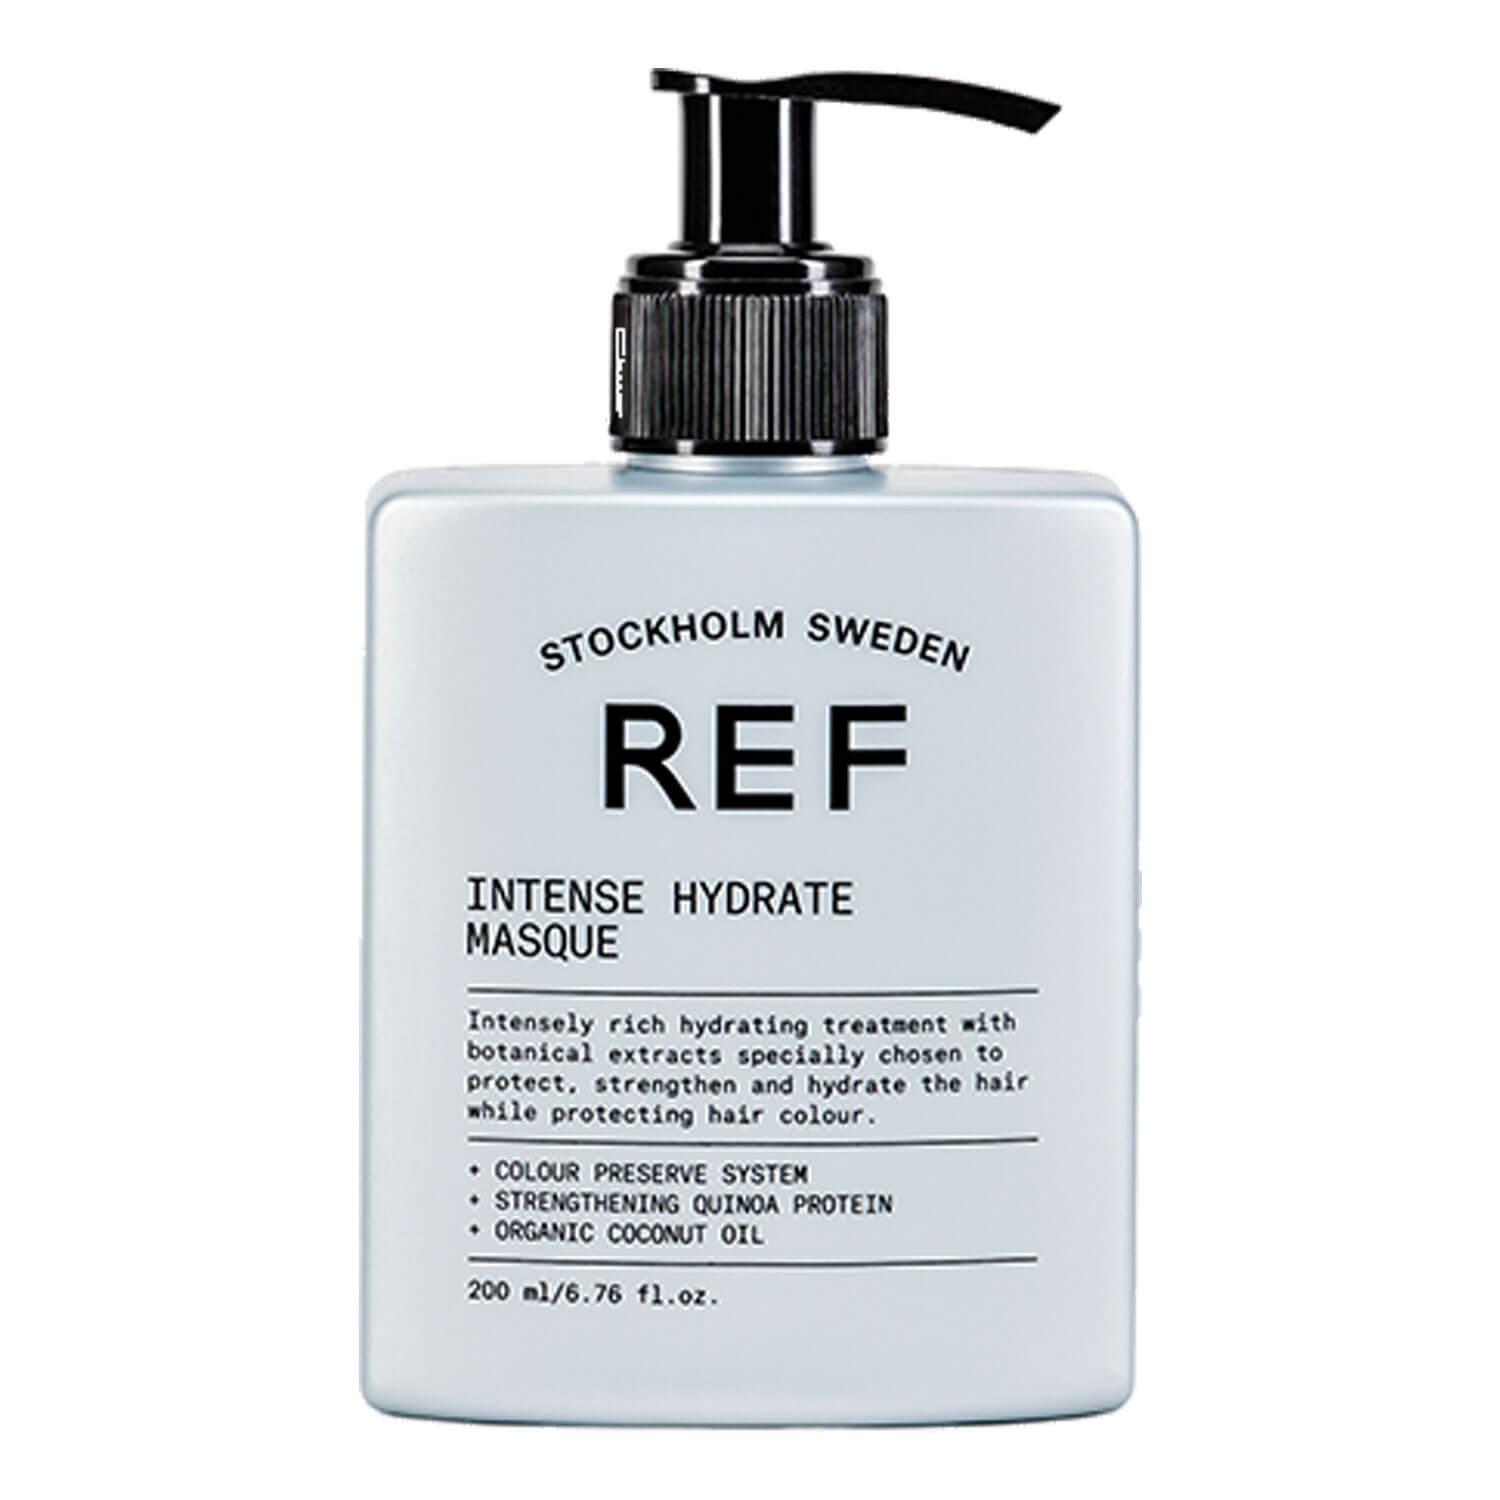 REF Treatment - Intense Hydrate Masque